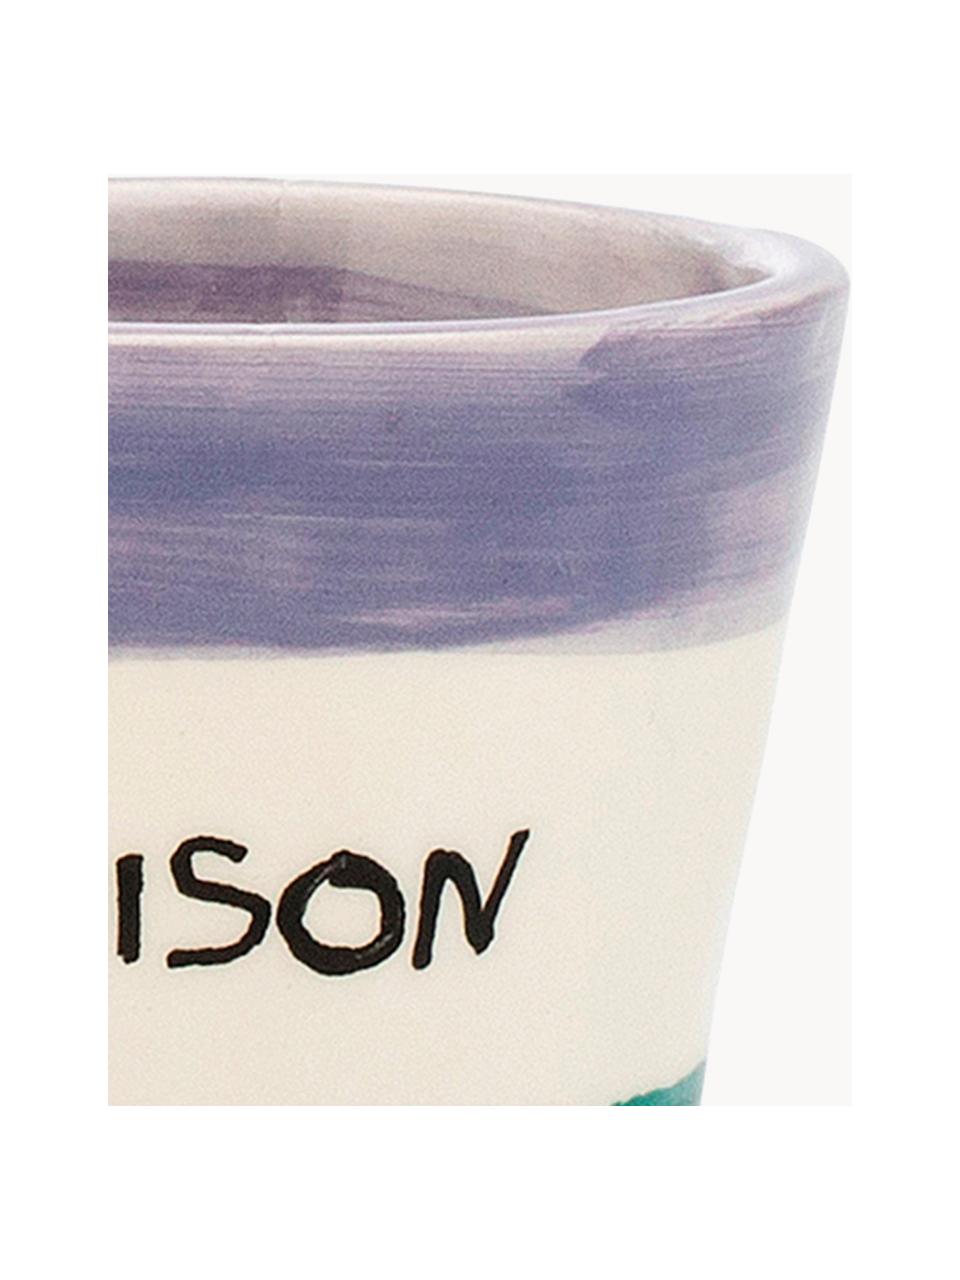 Handbemalte Espressobecher Poison, 6 Stück, Keramik, Lavendel, Off White, Schwarz, Petrol, Ø 7 x H 6 cm, 80 ml